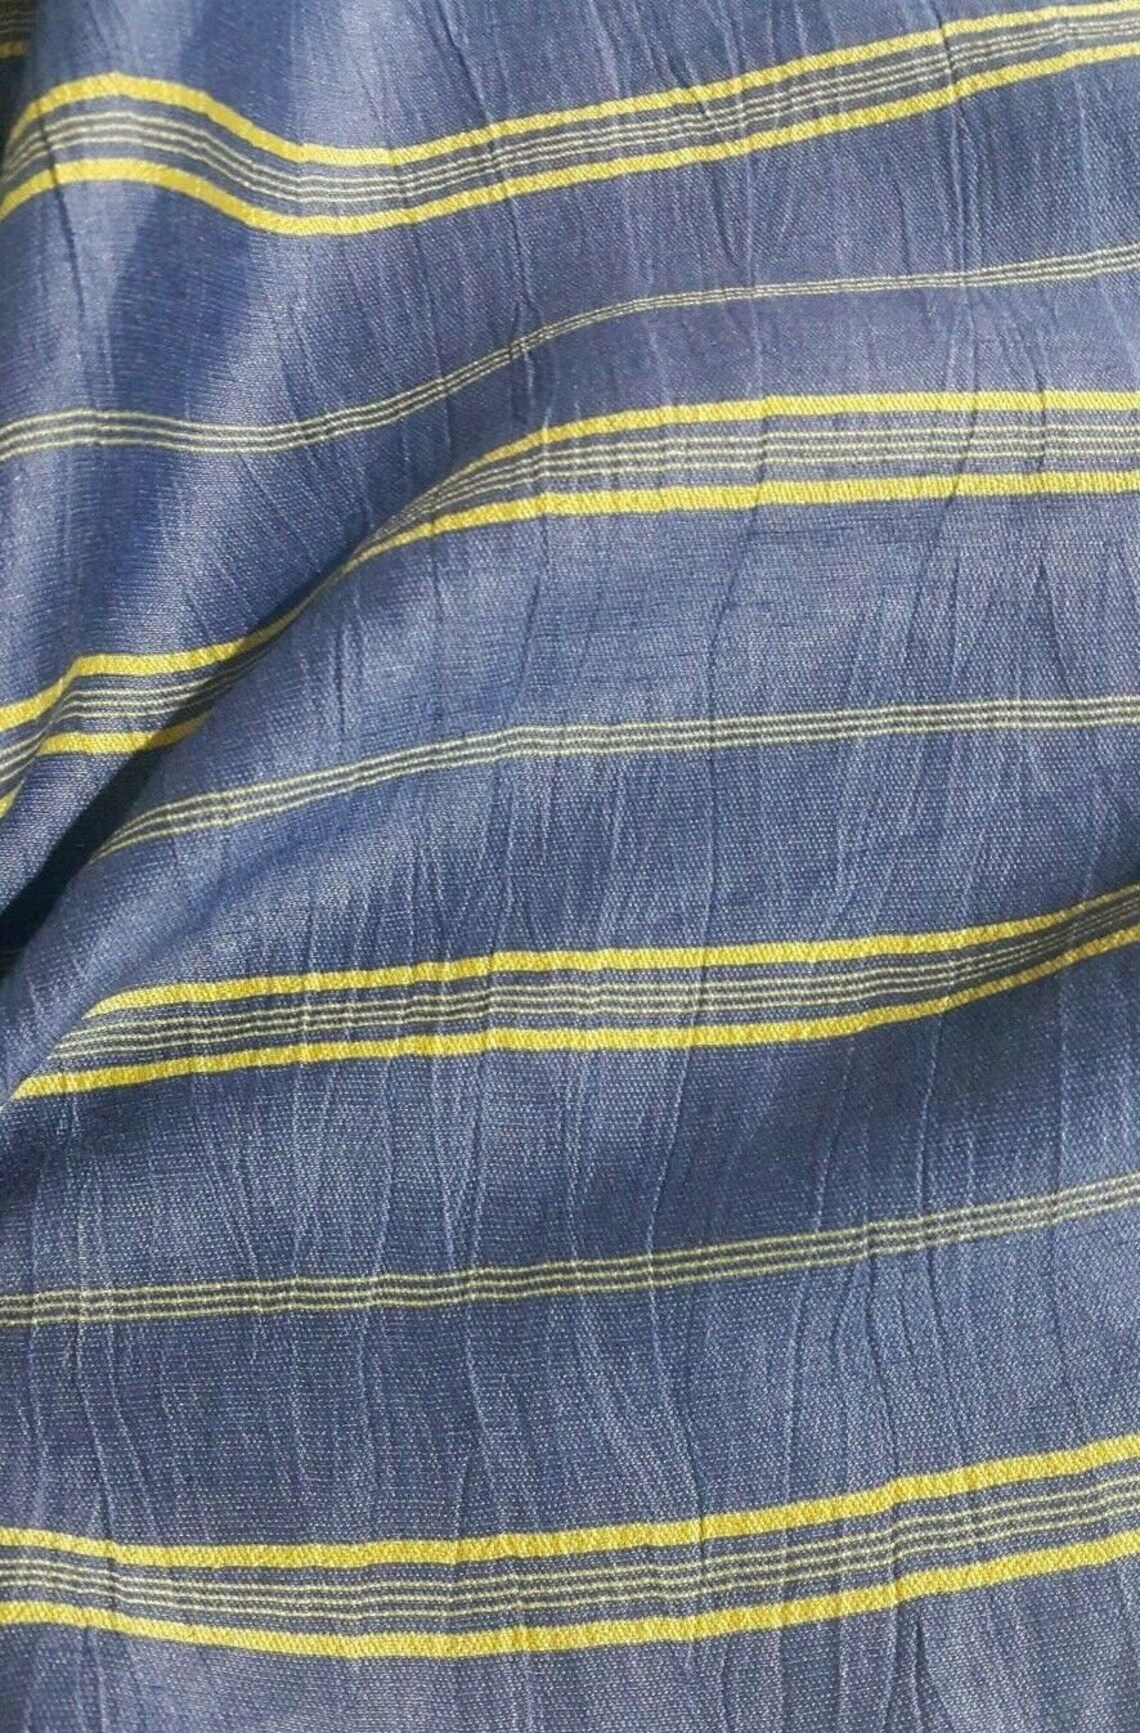 Linen Nylon Polyester Blend Fabric Crinkled Effect Yellow Blue | Etsy